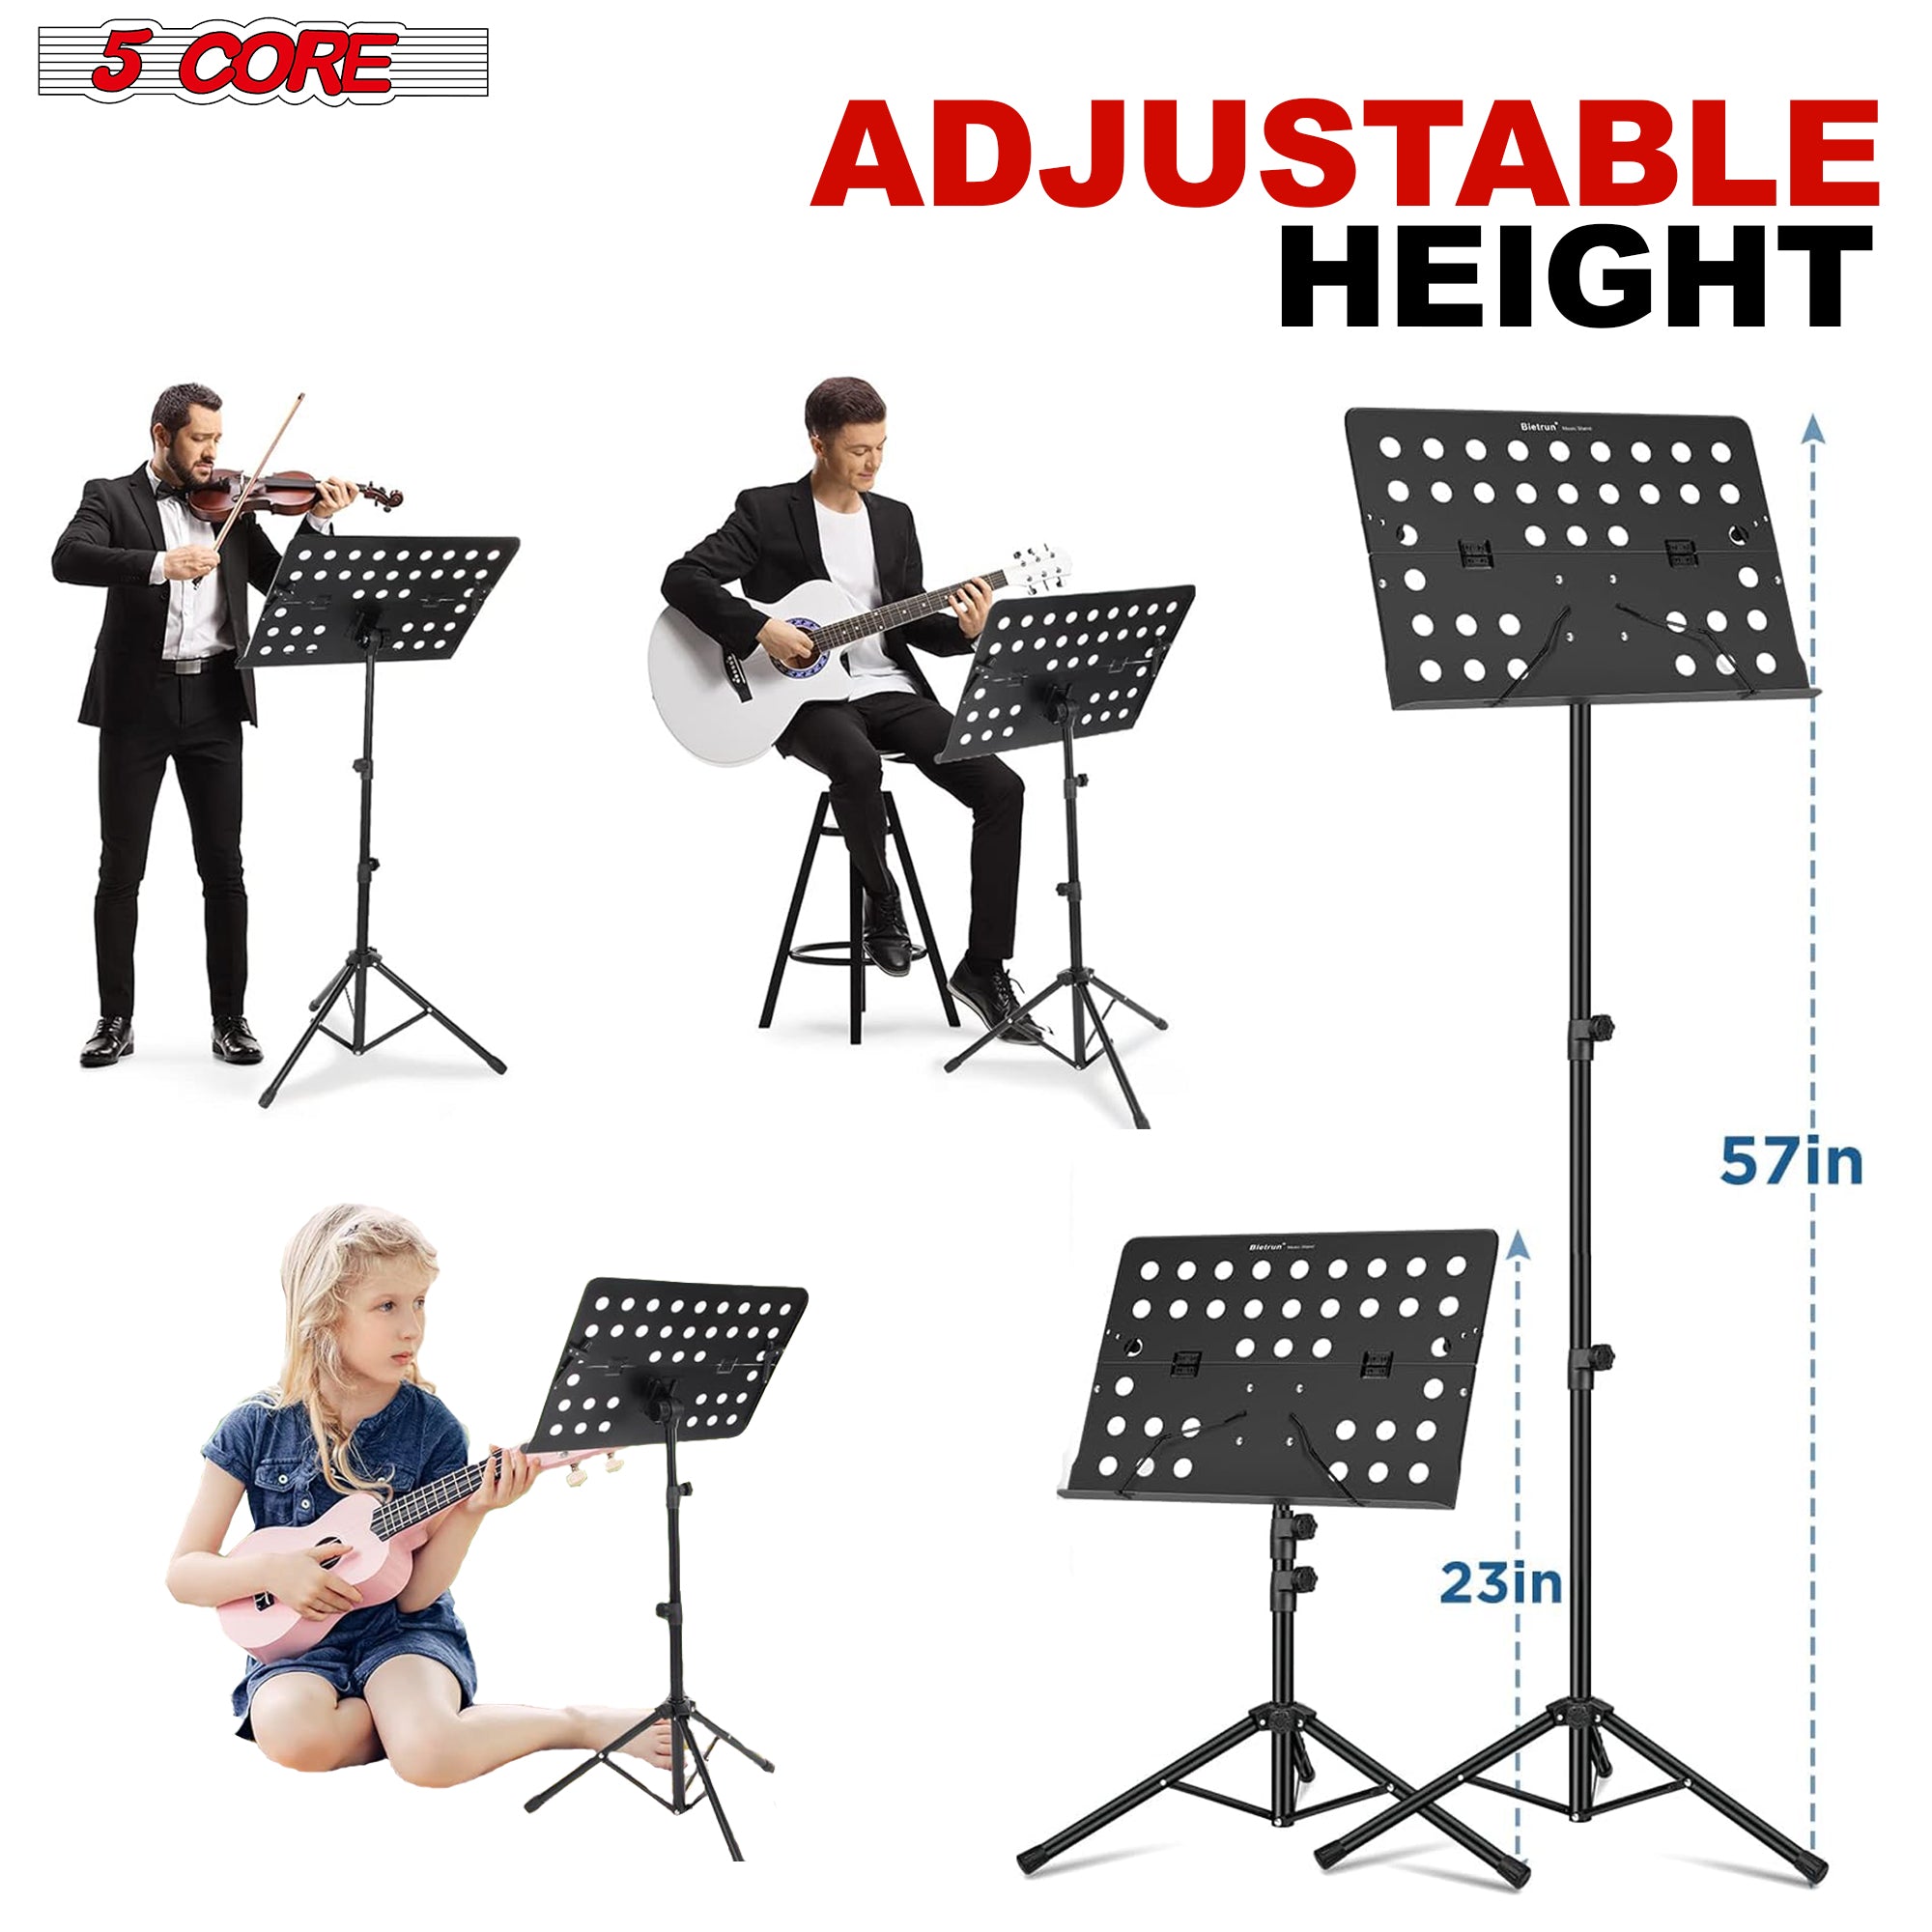 Height adjustable music stand